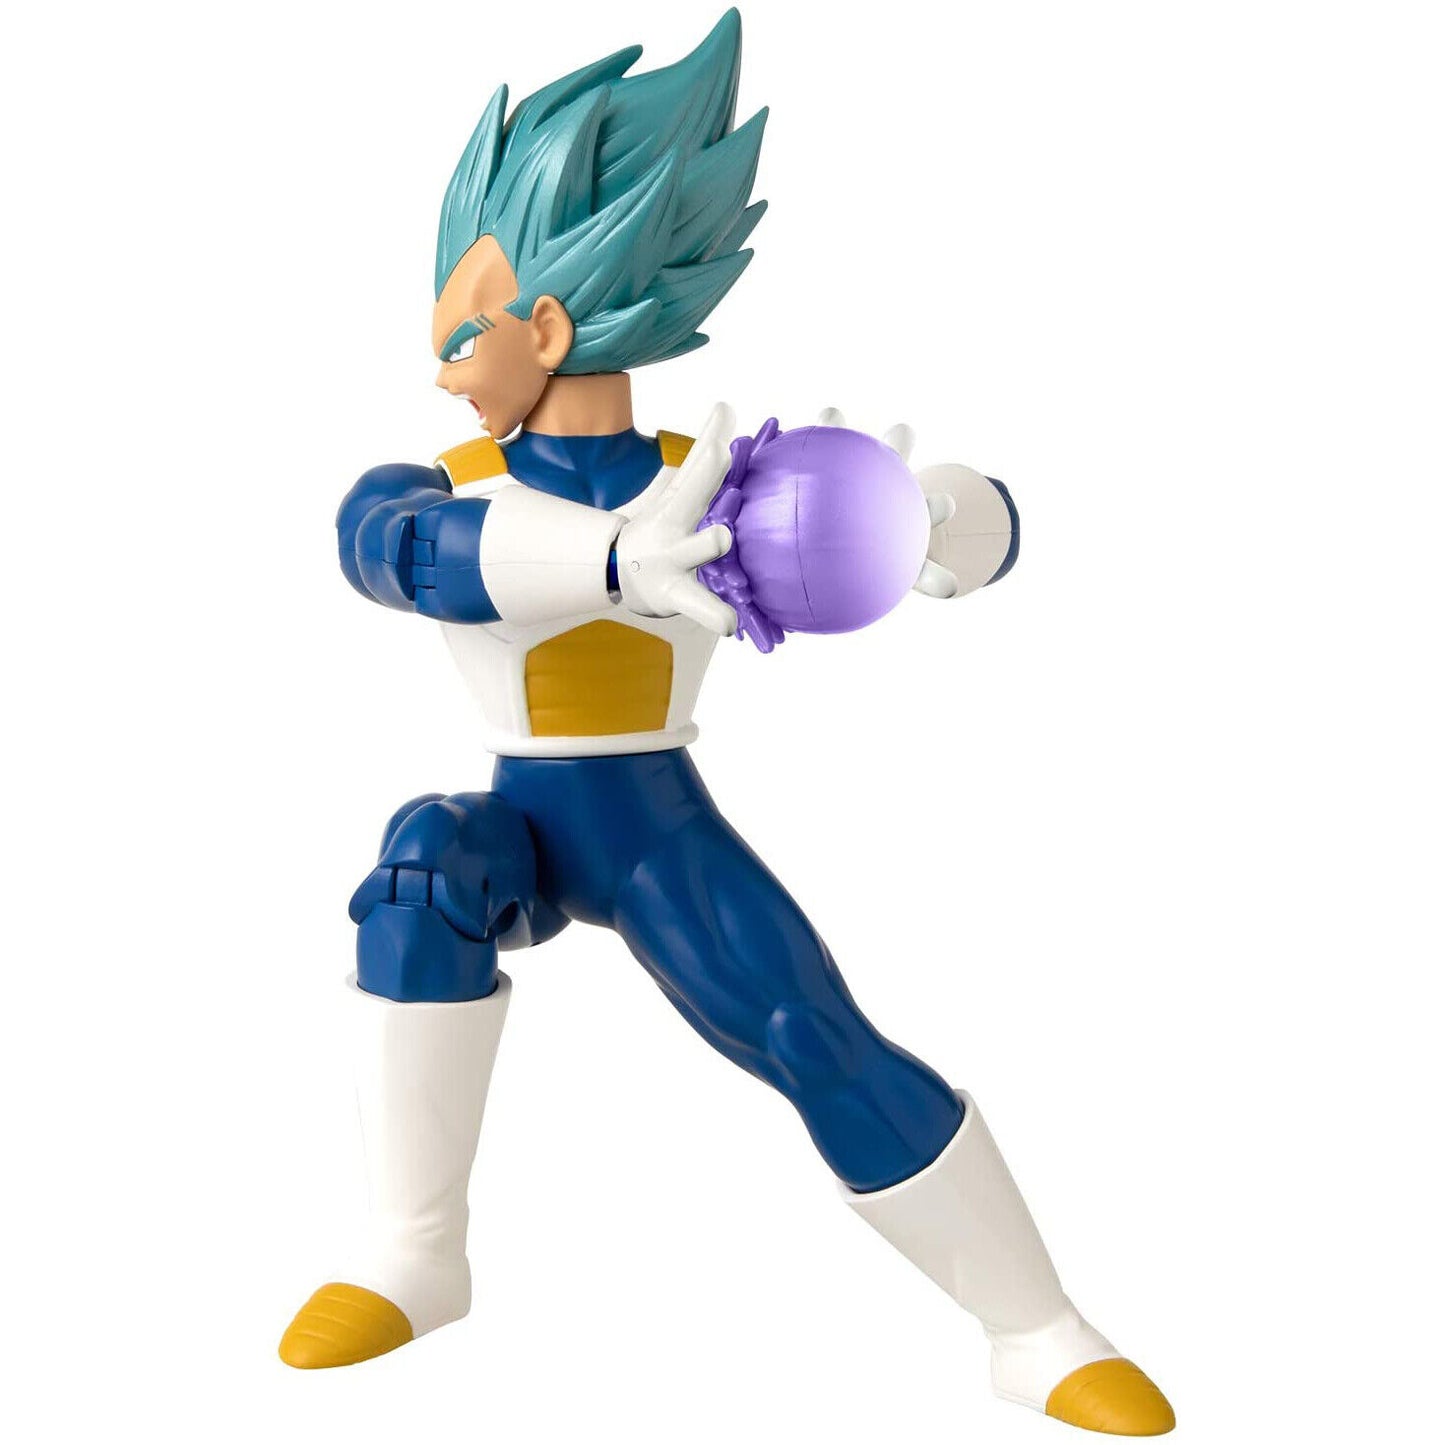 Bandai Dragon Ball Super Attack Collection - Super Saiyan Blue Vegeta